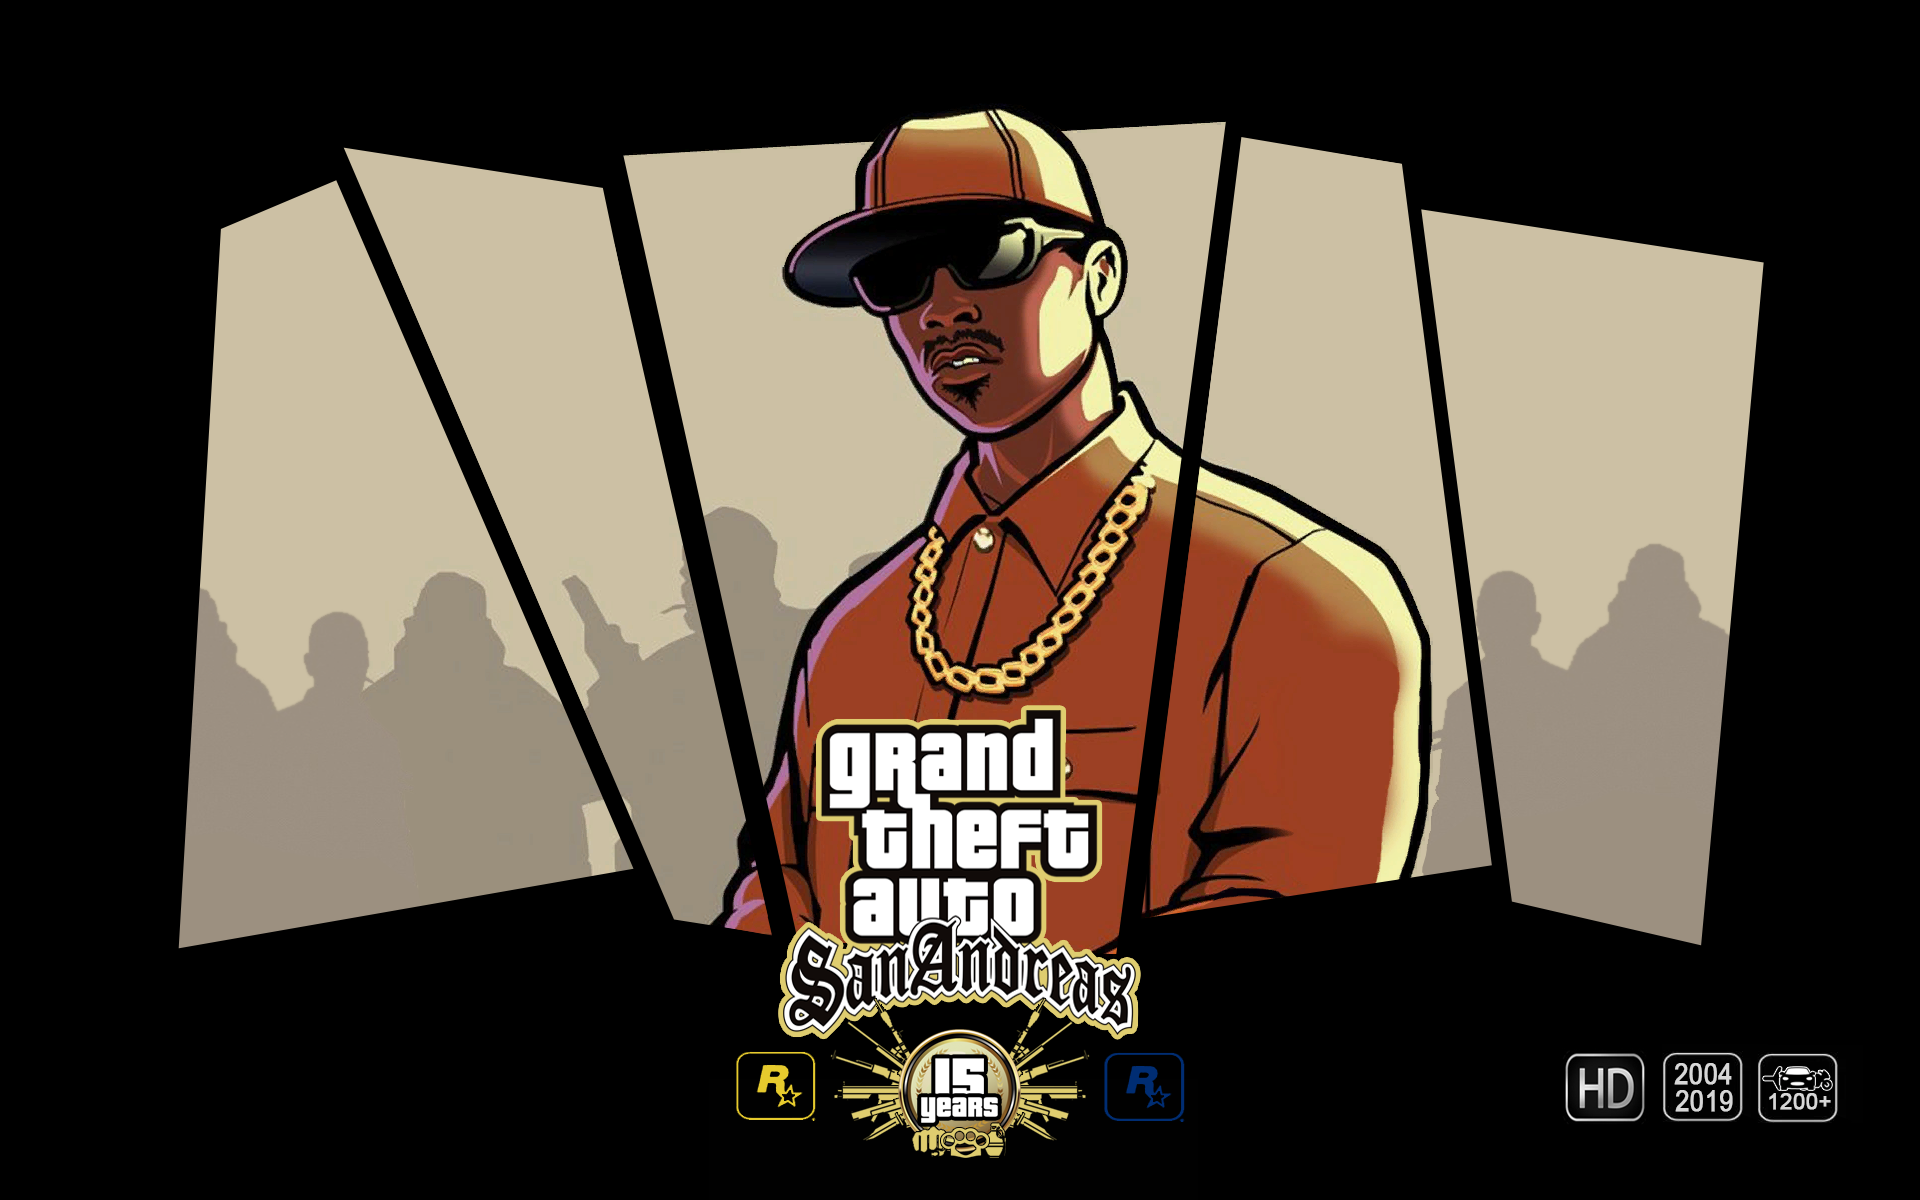 Gta loading theme. Grand Theft auto: San Andreas. Grand Theft auto Сан андреас. ГТА Сан андреас загрузочные экраны. GTA sa плакат.